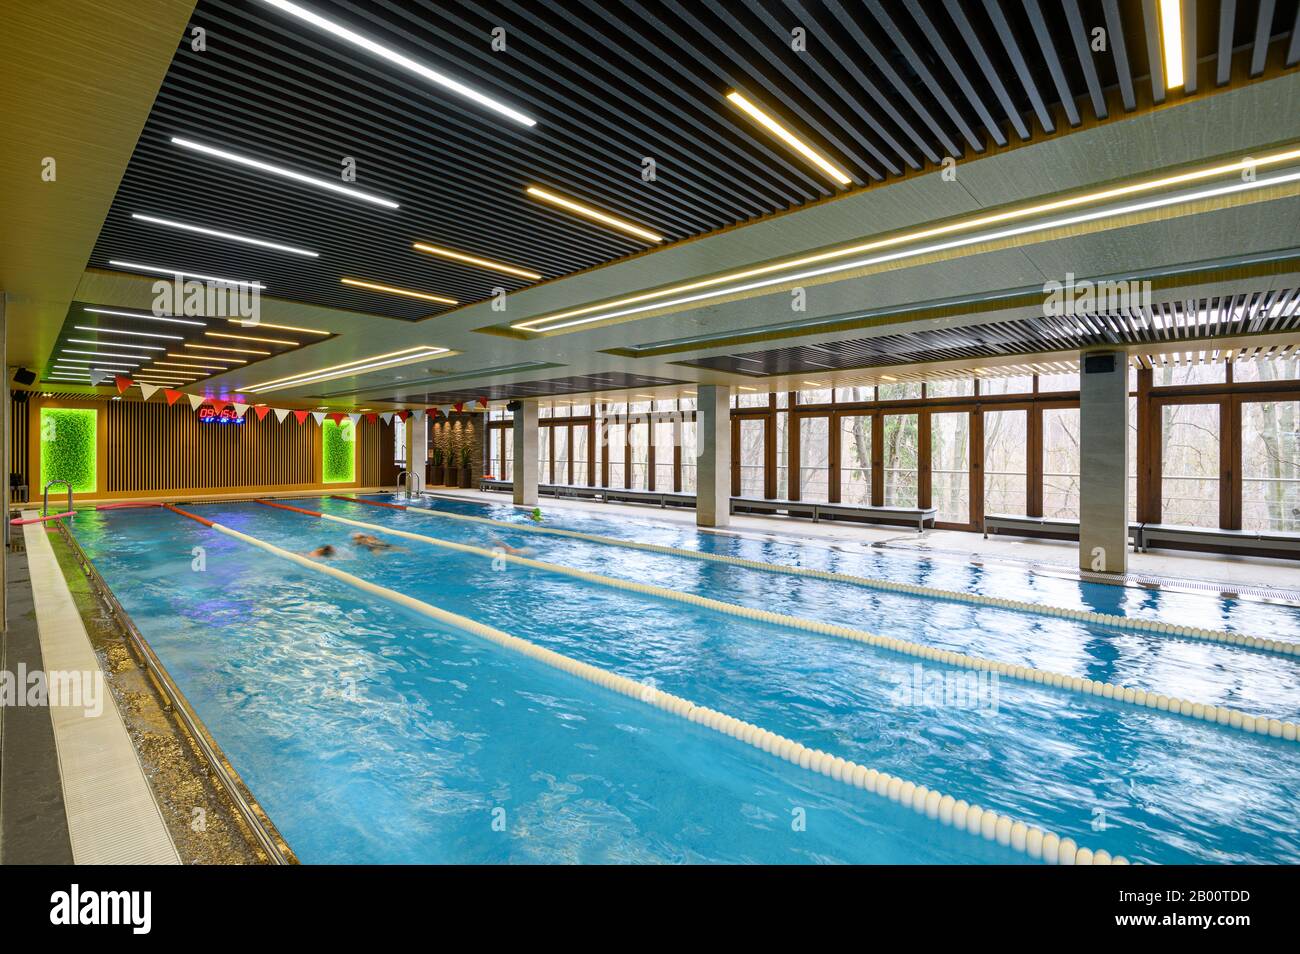 Luxury sportive indoor swimming pool with lanes interior Stock Photo